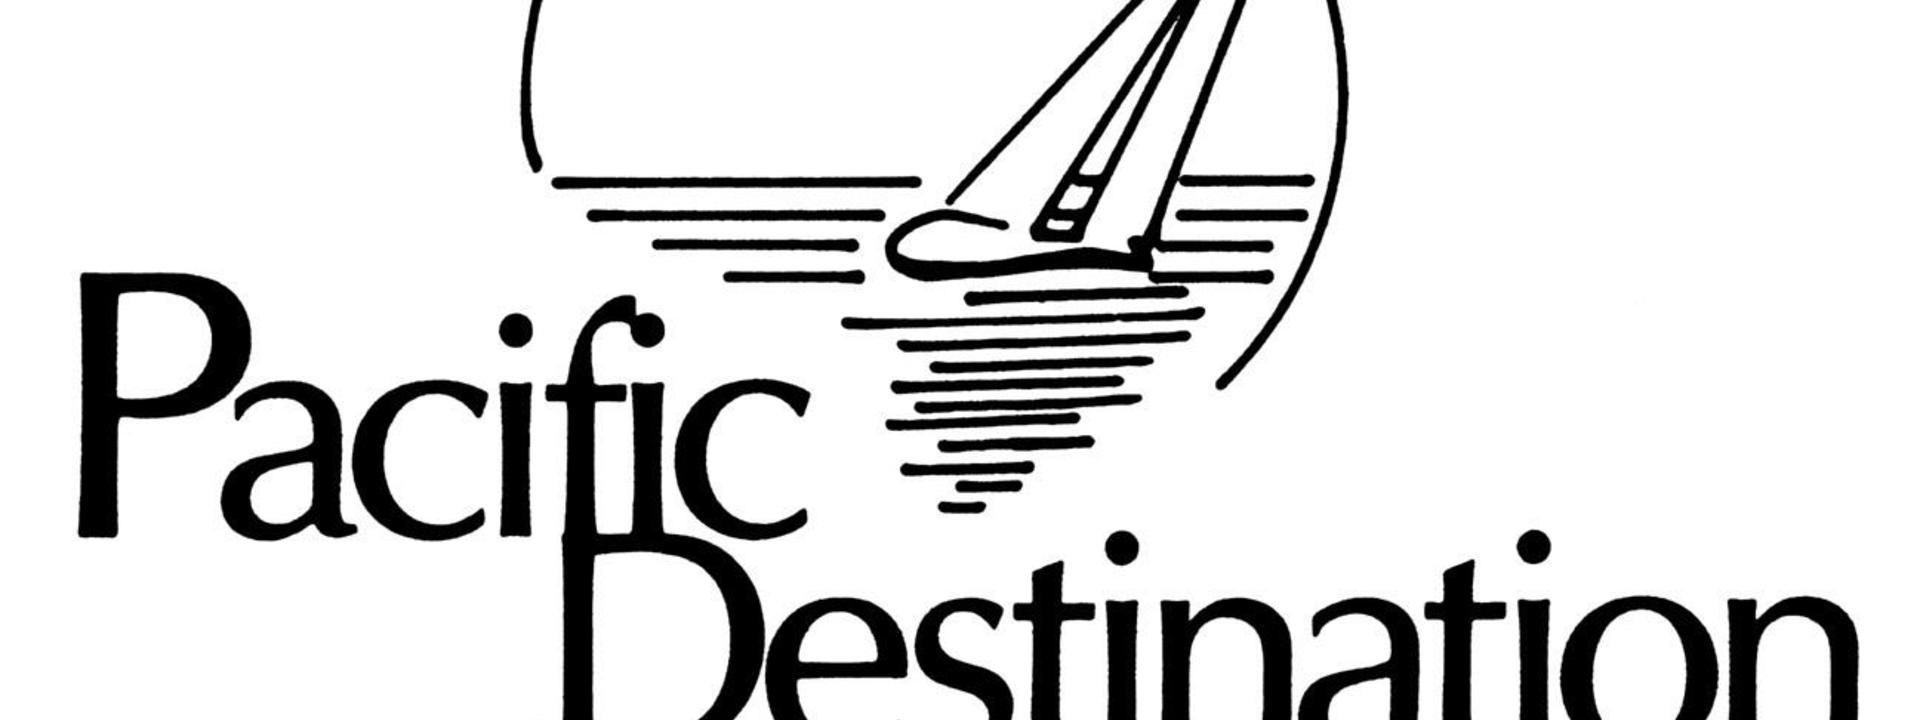 PDC 2 logo1